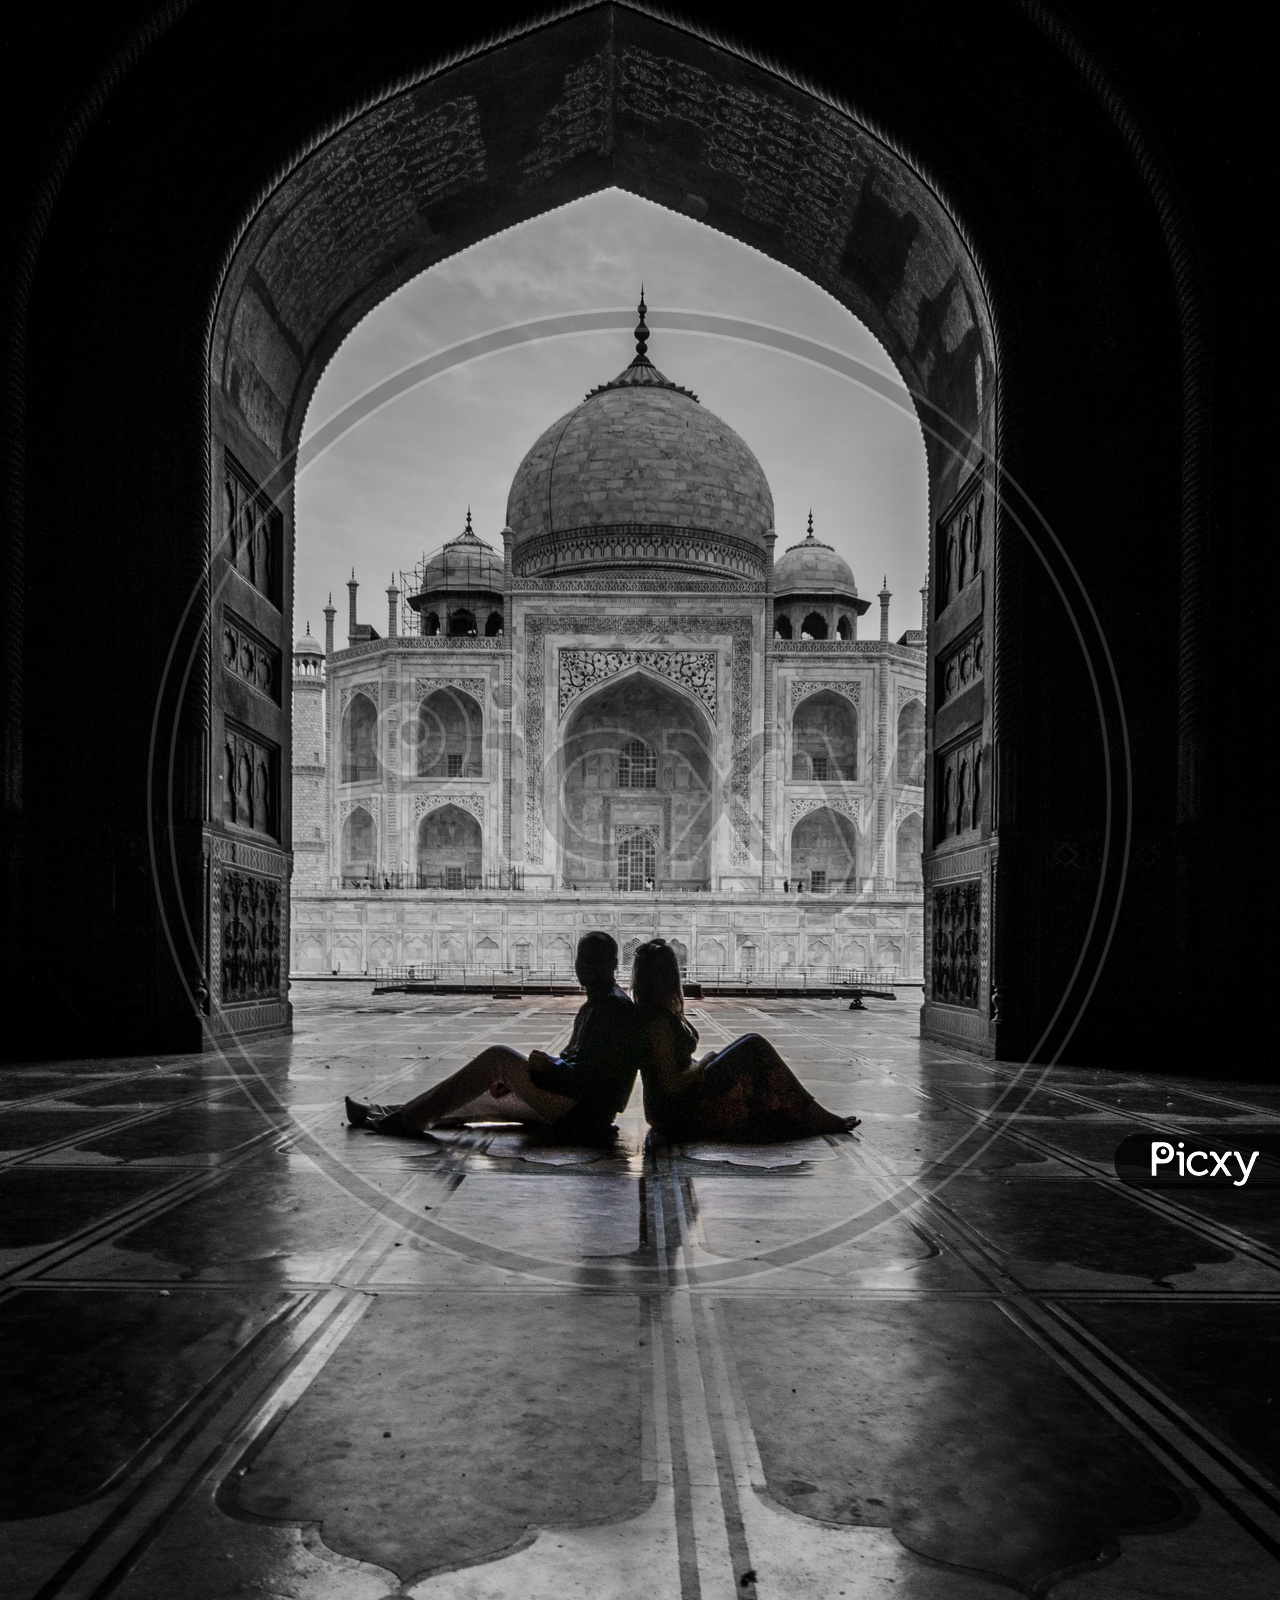 Eva Longoria visited Taj Mahal, unleashed the tourist inside her |  Hollywood - Hindustan Times